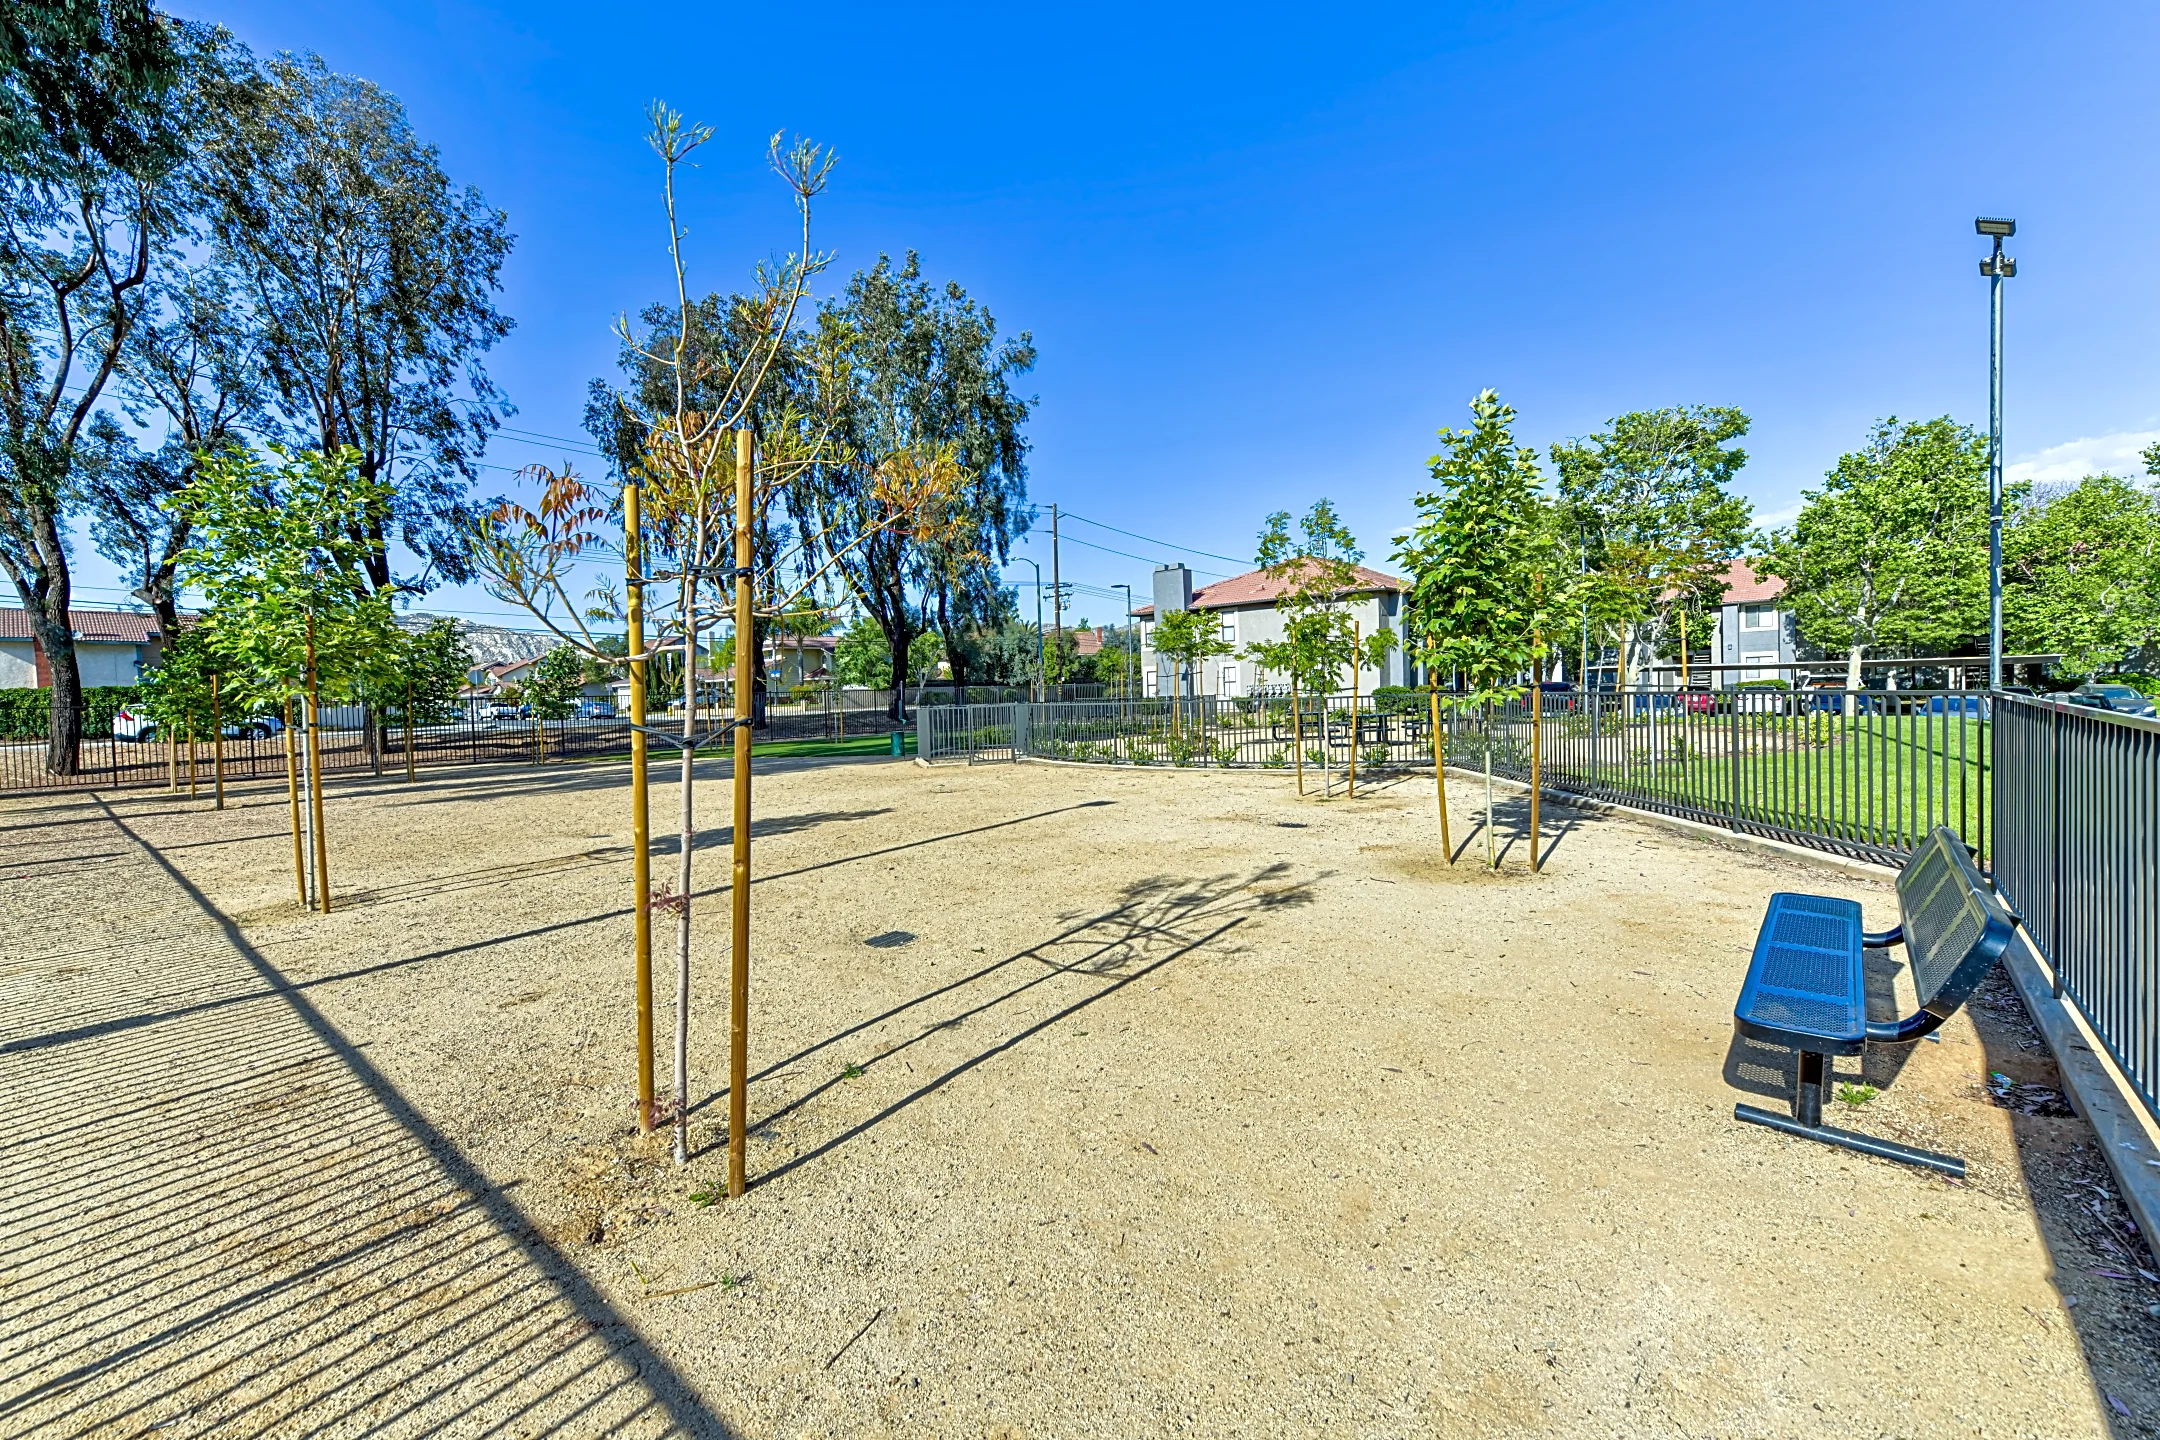 Playground - Sorelle - Moreno Valley, CA